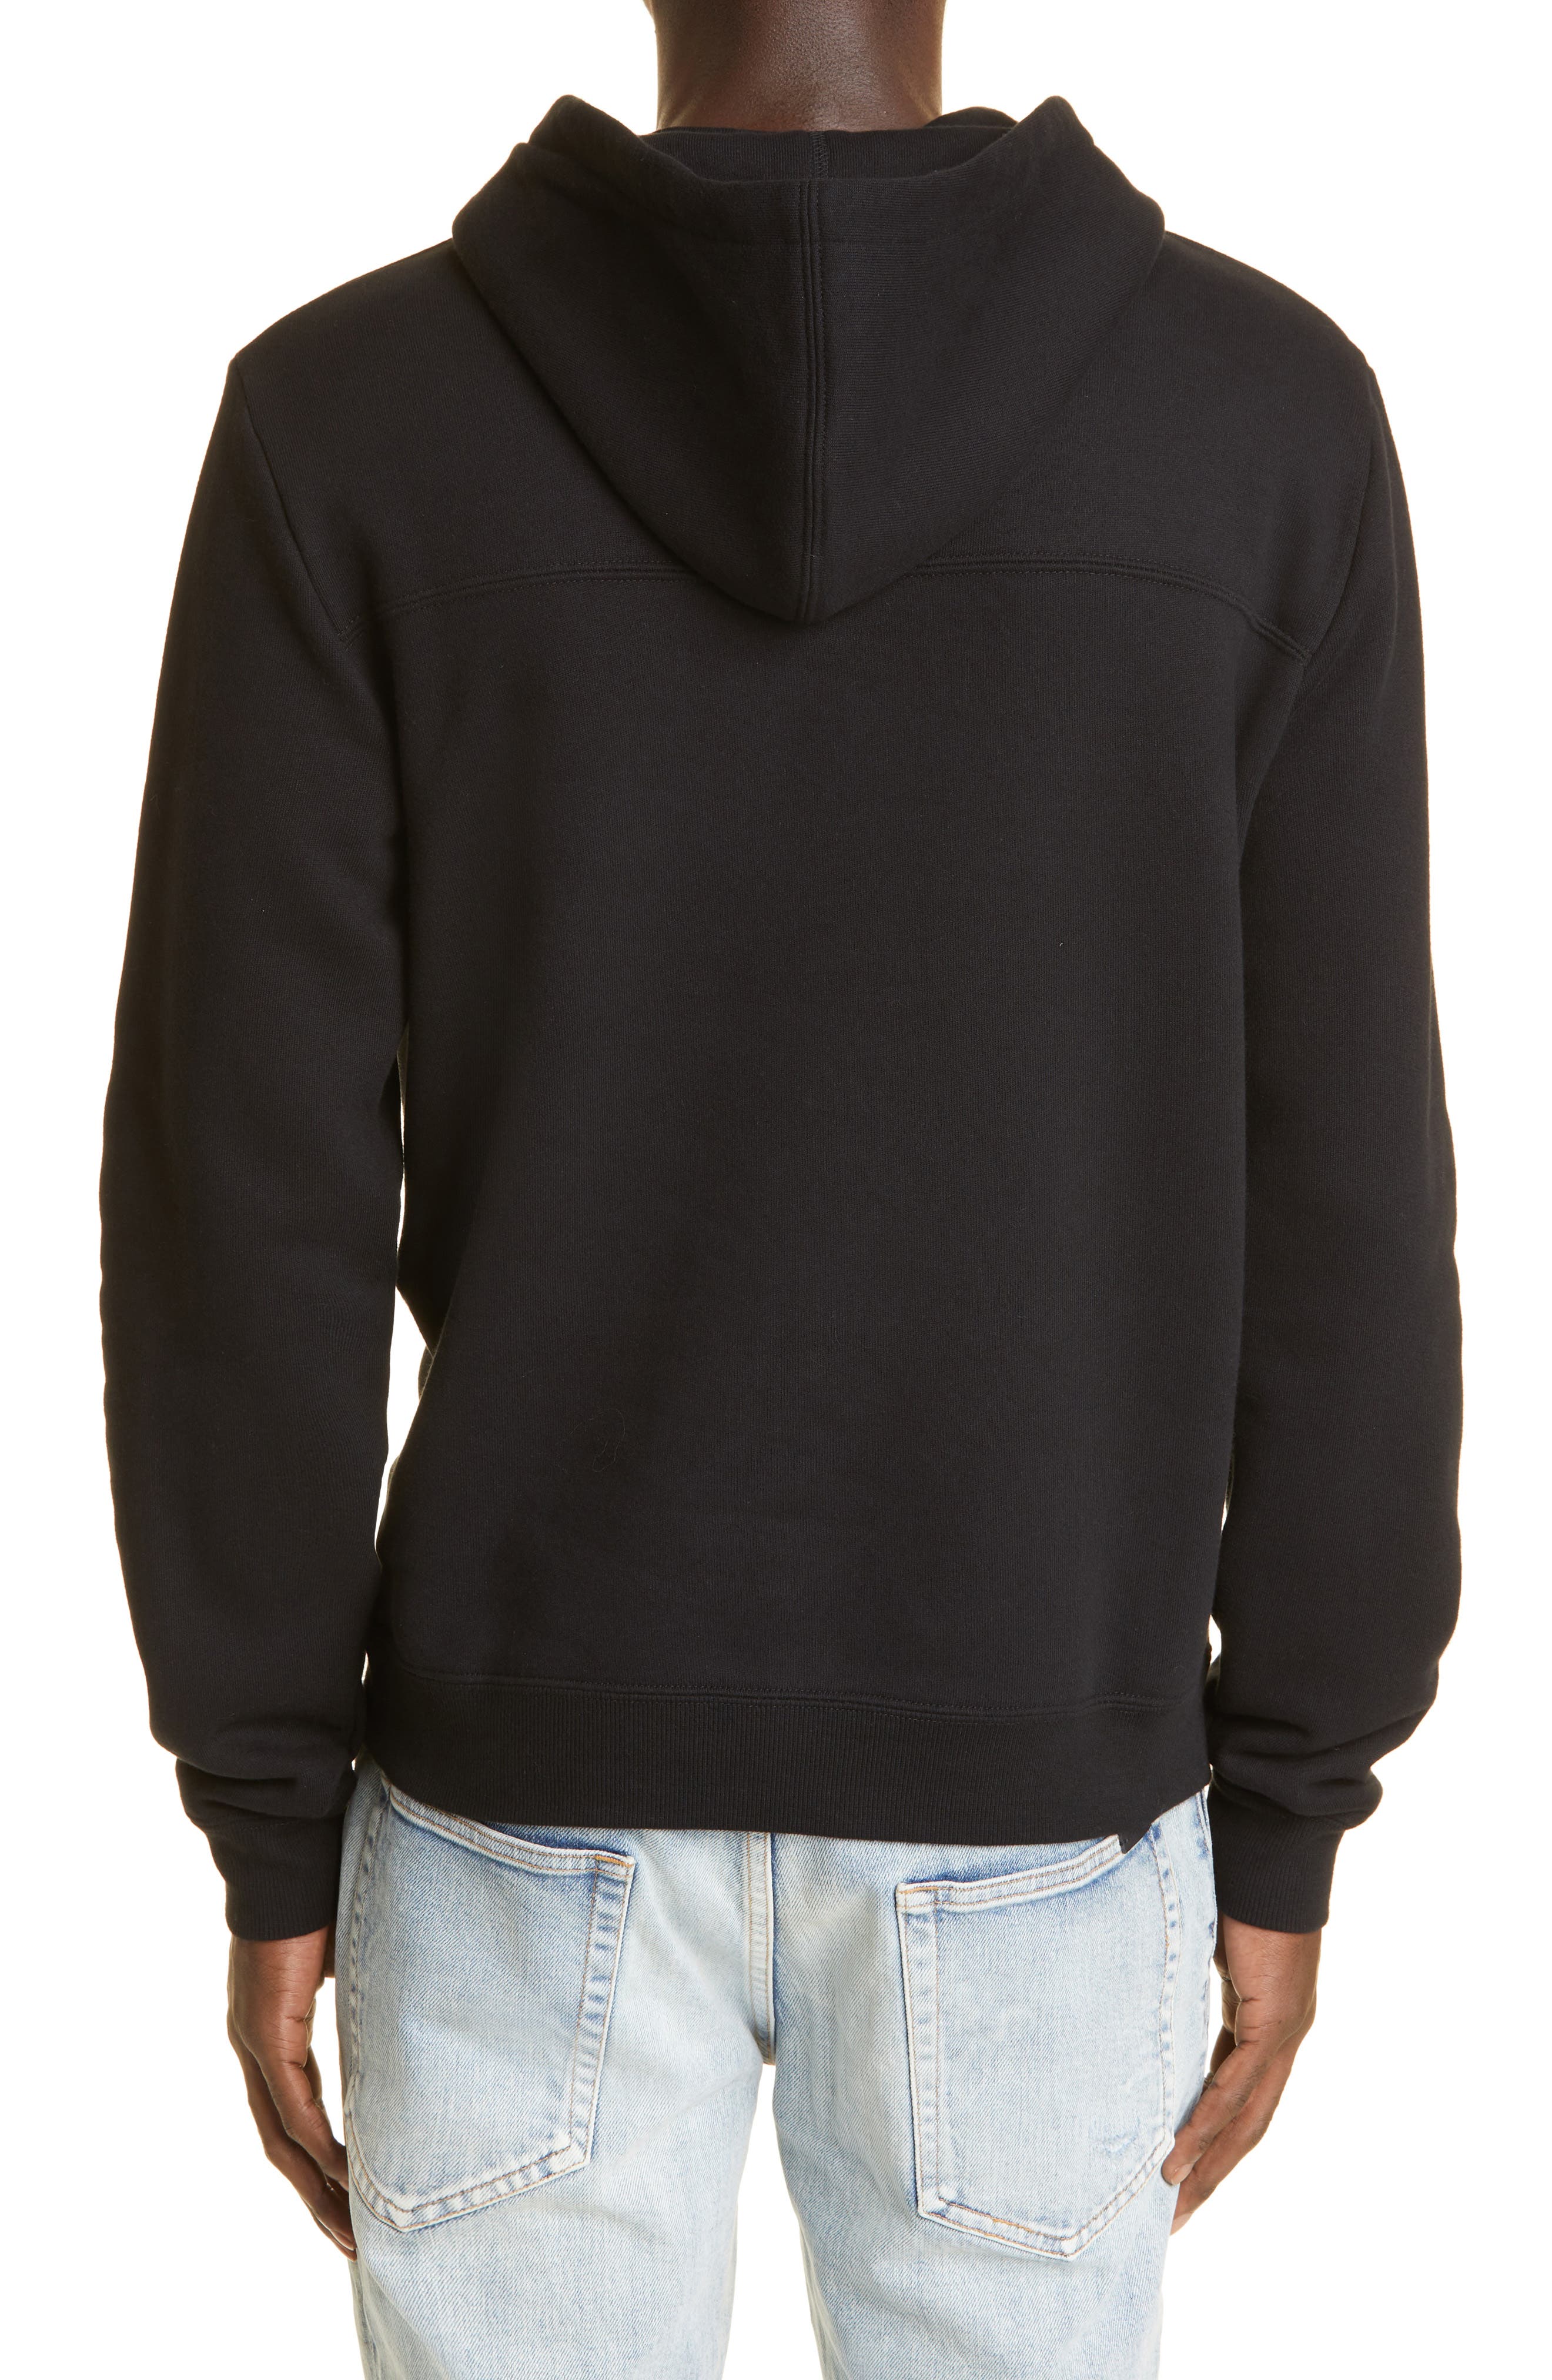 AP.Room Womens BTS Logo Long Sleeves Casual Pullover Hooded Sweatshirt with Pocket Black 